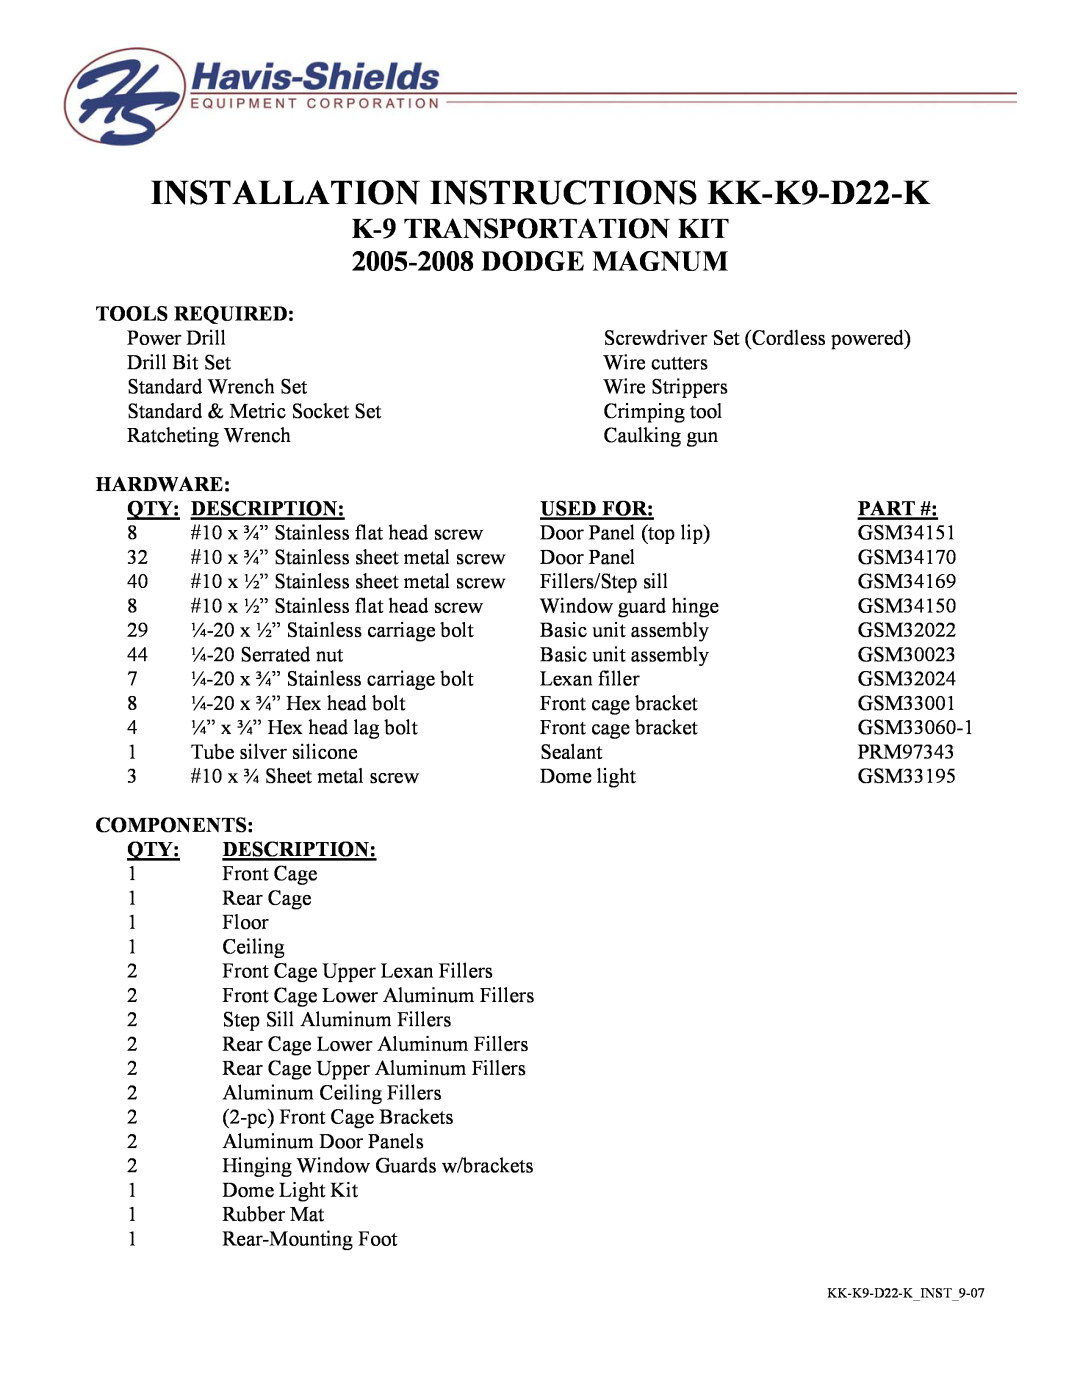 Havis-Shields KK-K9-D22-K installation instructions Tools Required, Hardware, Qty Description, Used For, Part # 